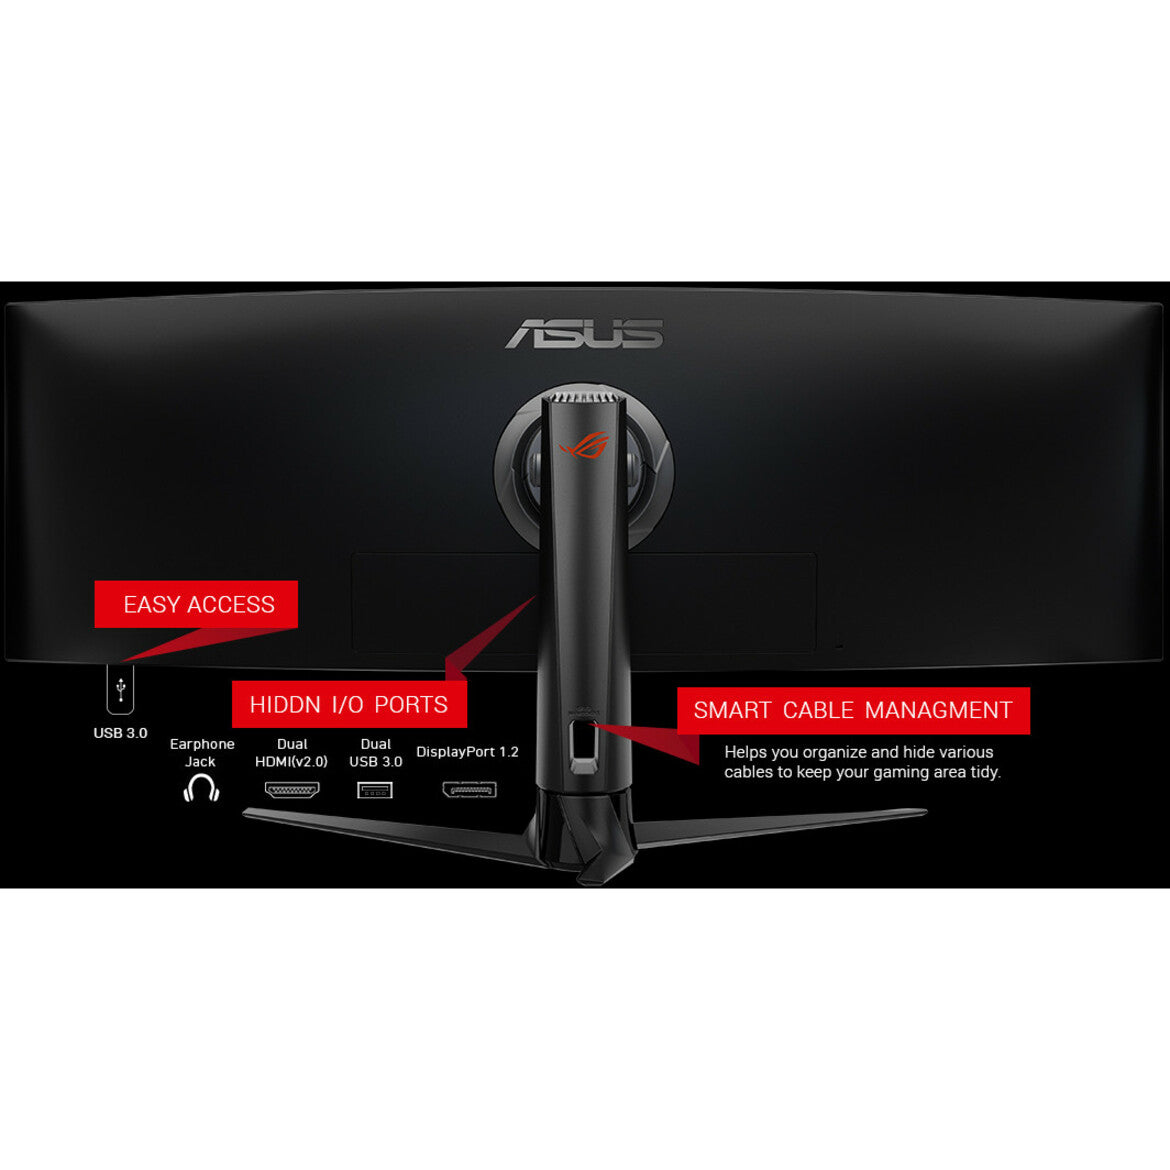 Asus ROG XG49VQ Strix Widescreen LCD Monitor, 49", Double Full HD (DFHD), Curved Screen, FreeSync 2, USB Hub